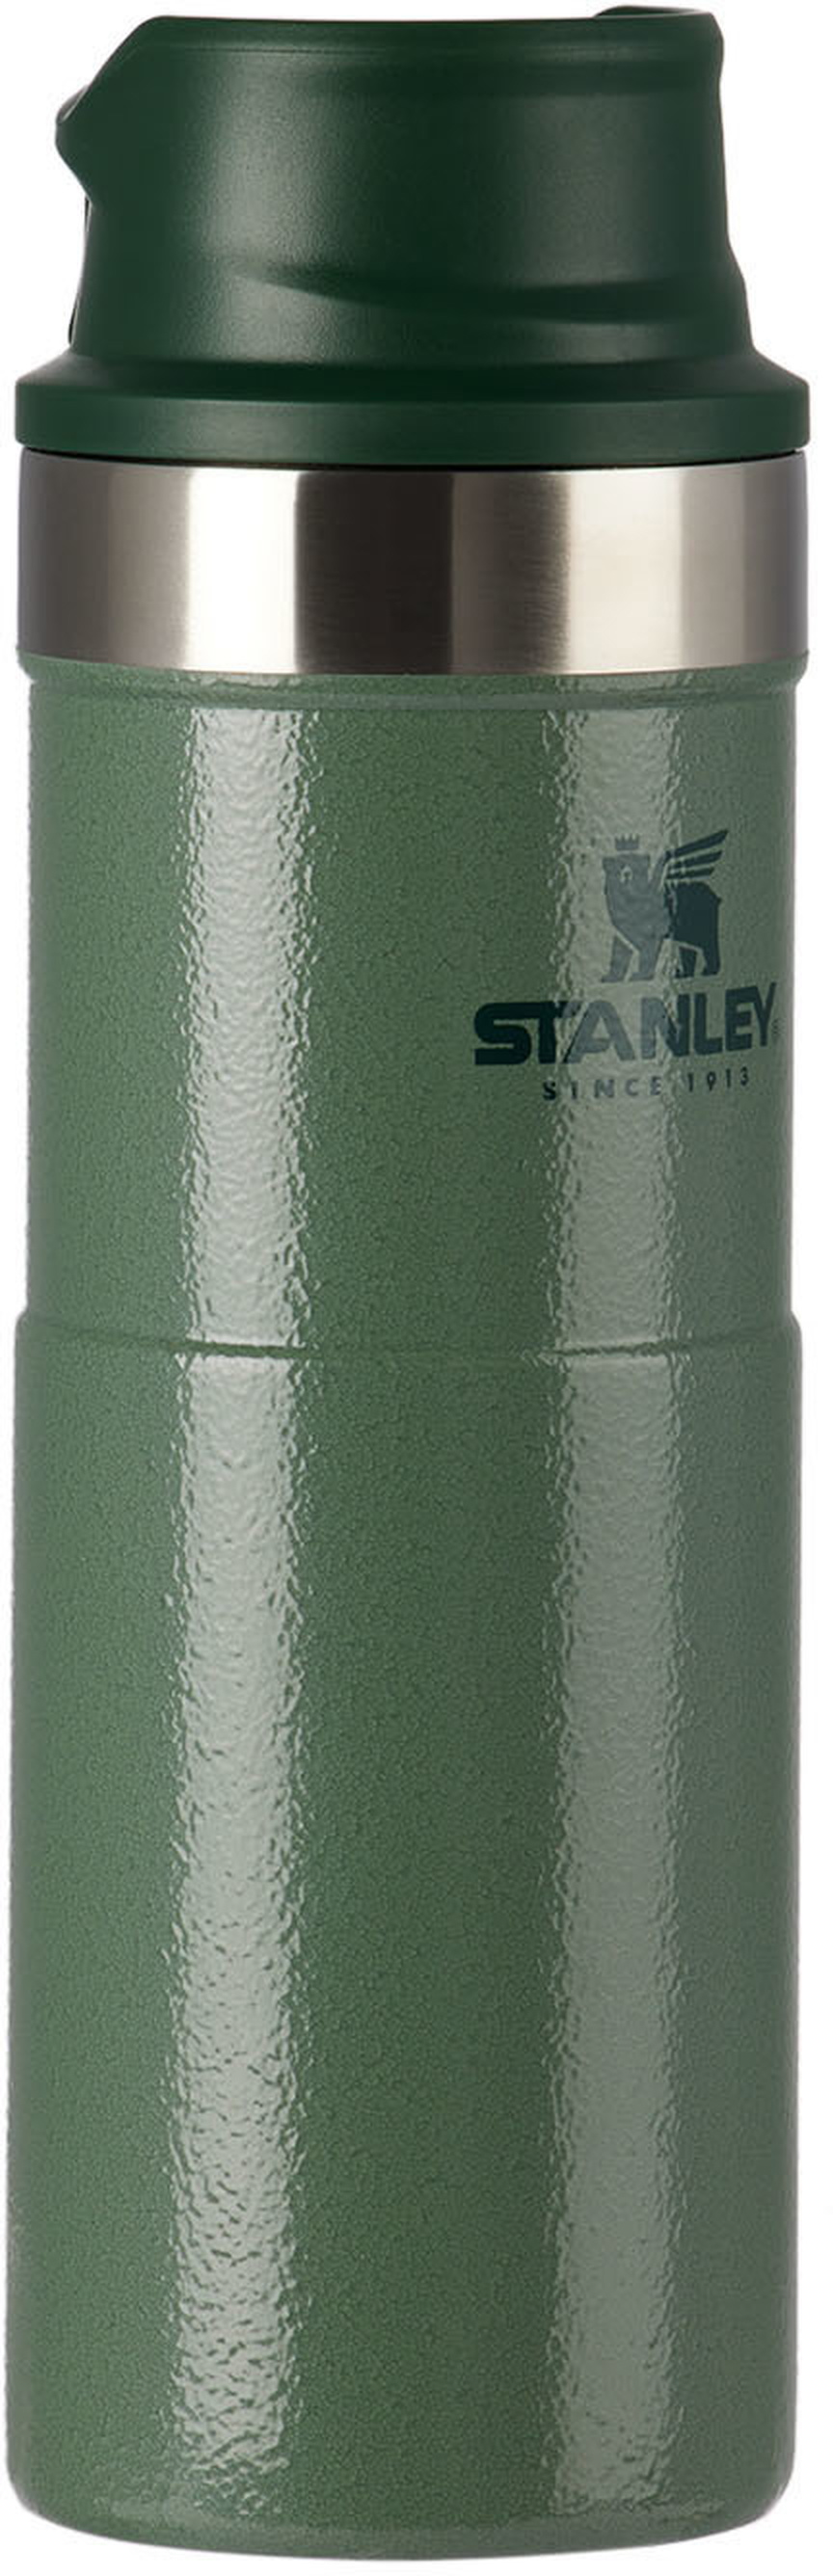 Stanley Classic Trigger Action Travel Mug 0.47L - Hammertone Green